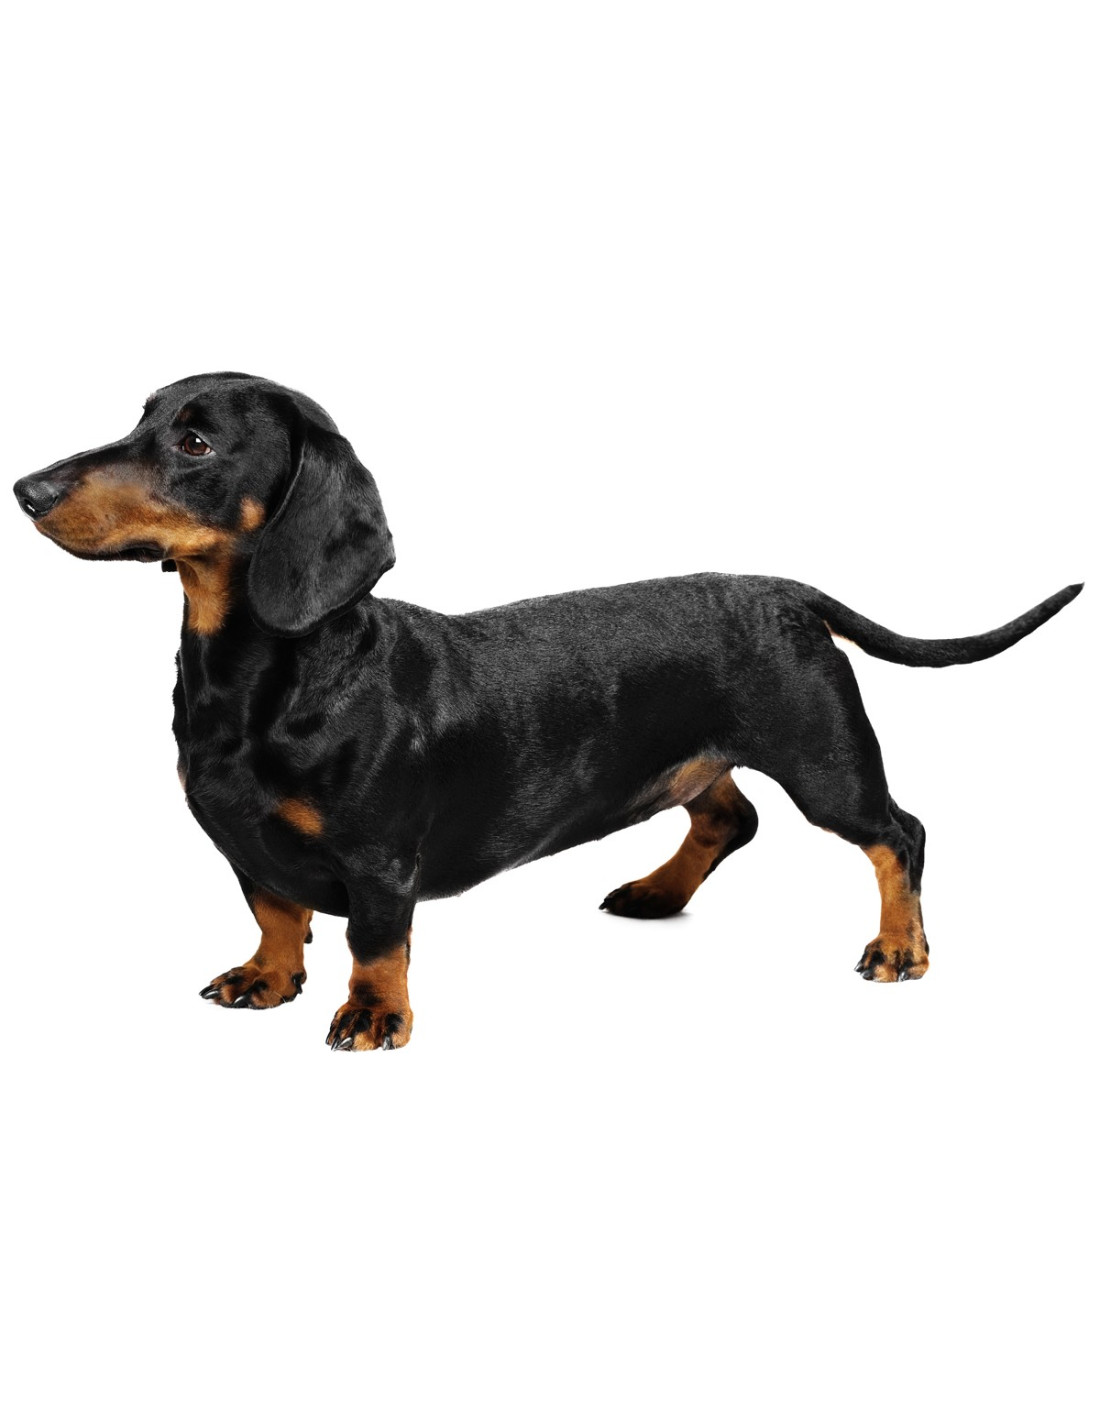 dachshund dog breeds